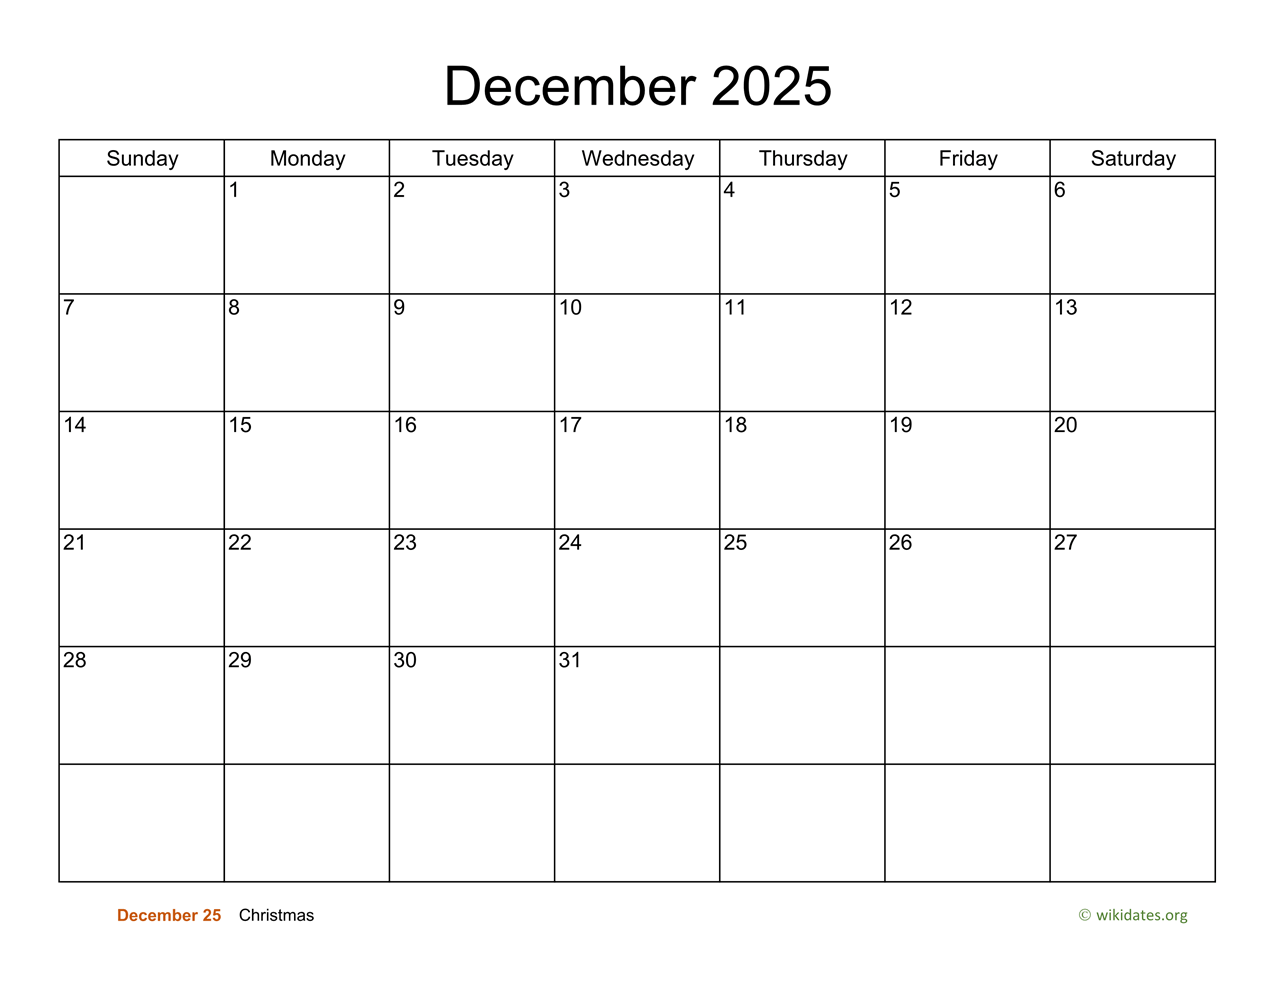 basic-calendar-for-december-2025-wikidates